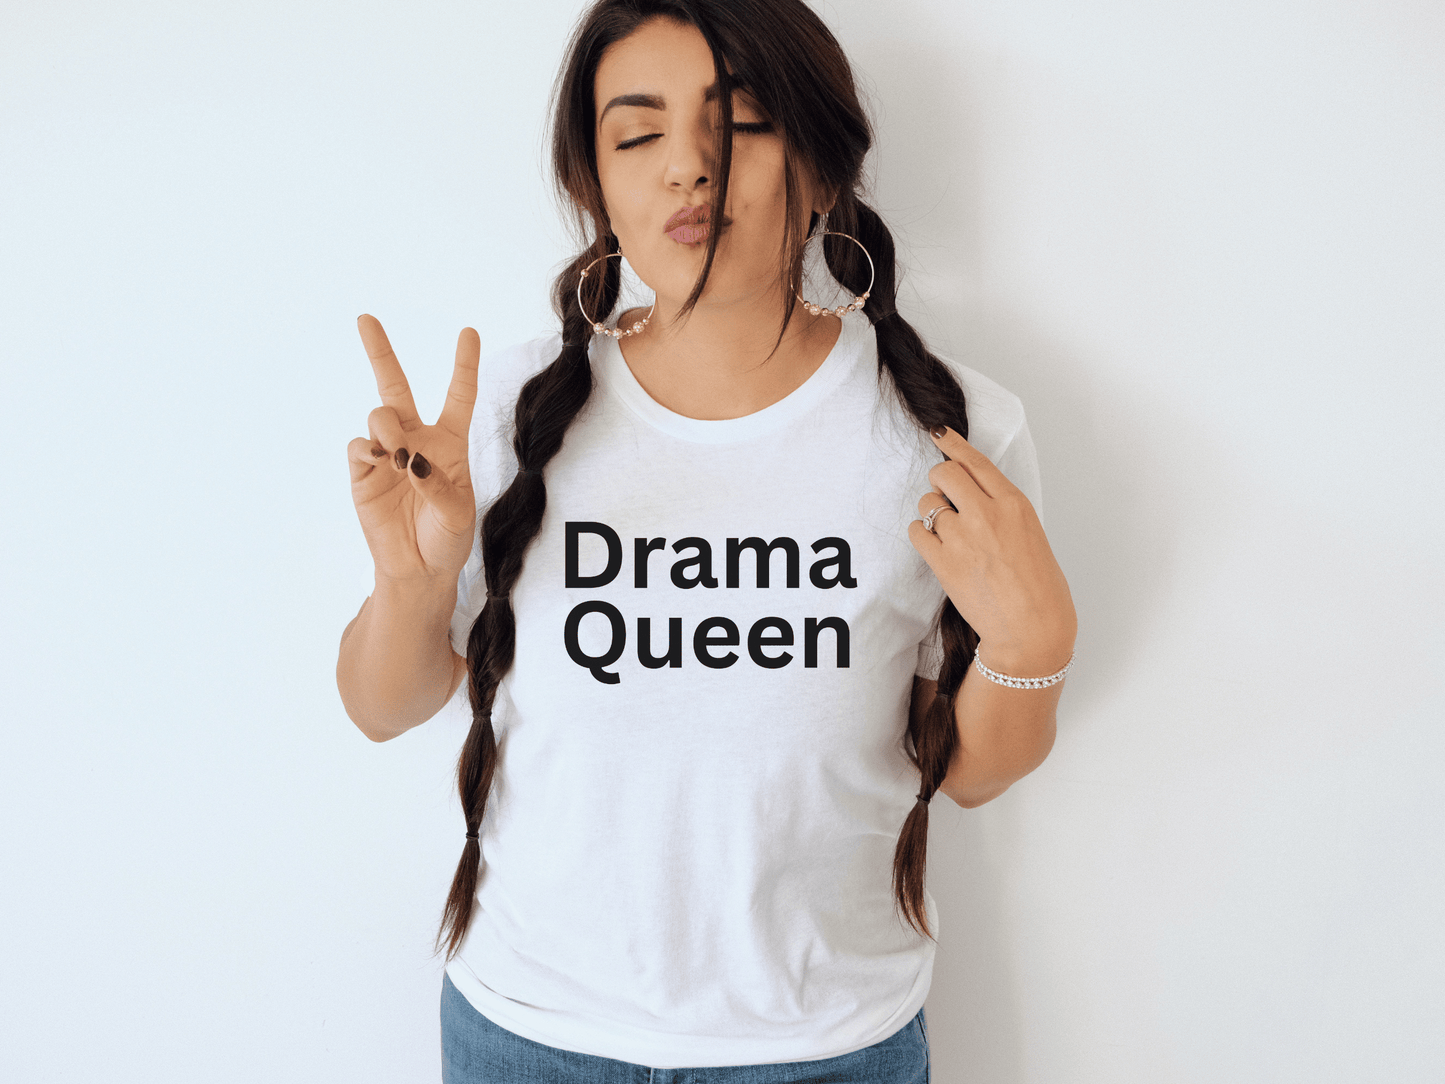 Drama Queen T-Shirt in White